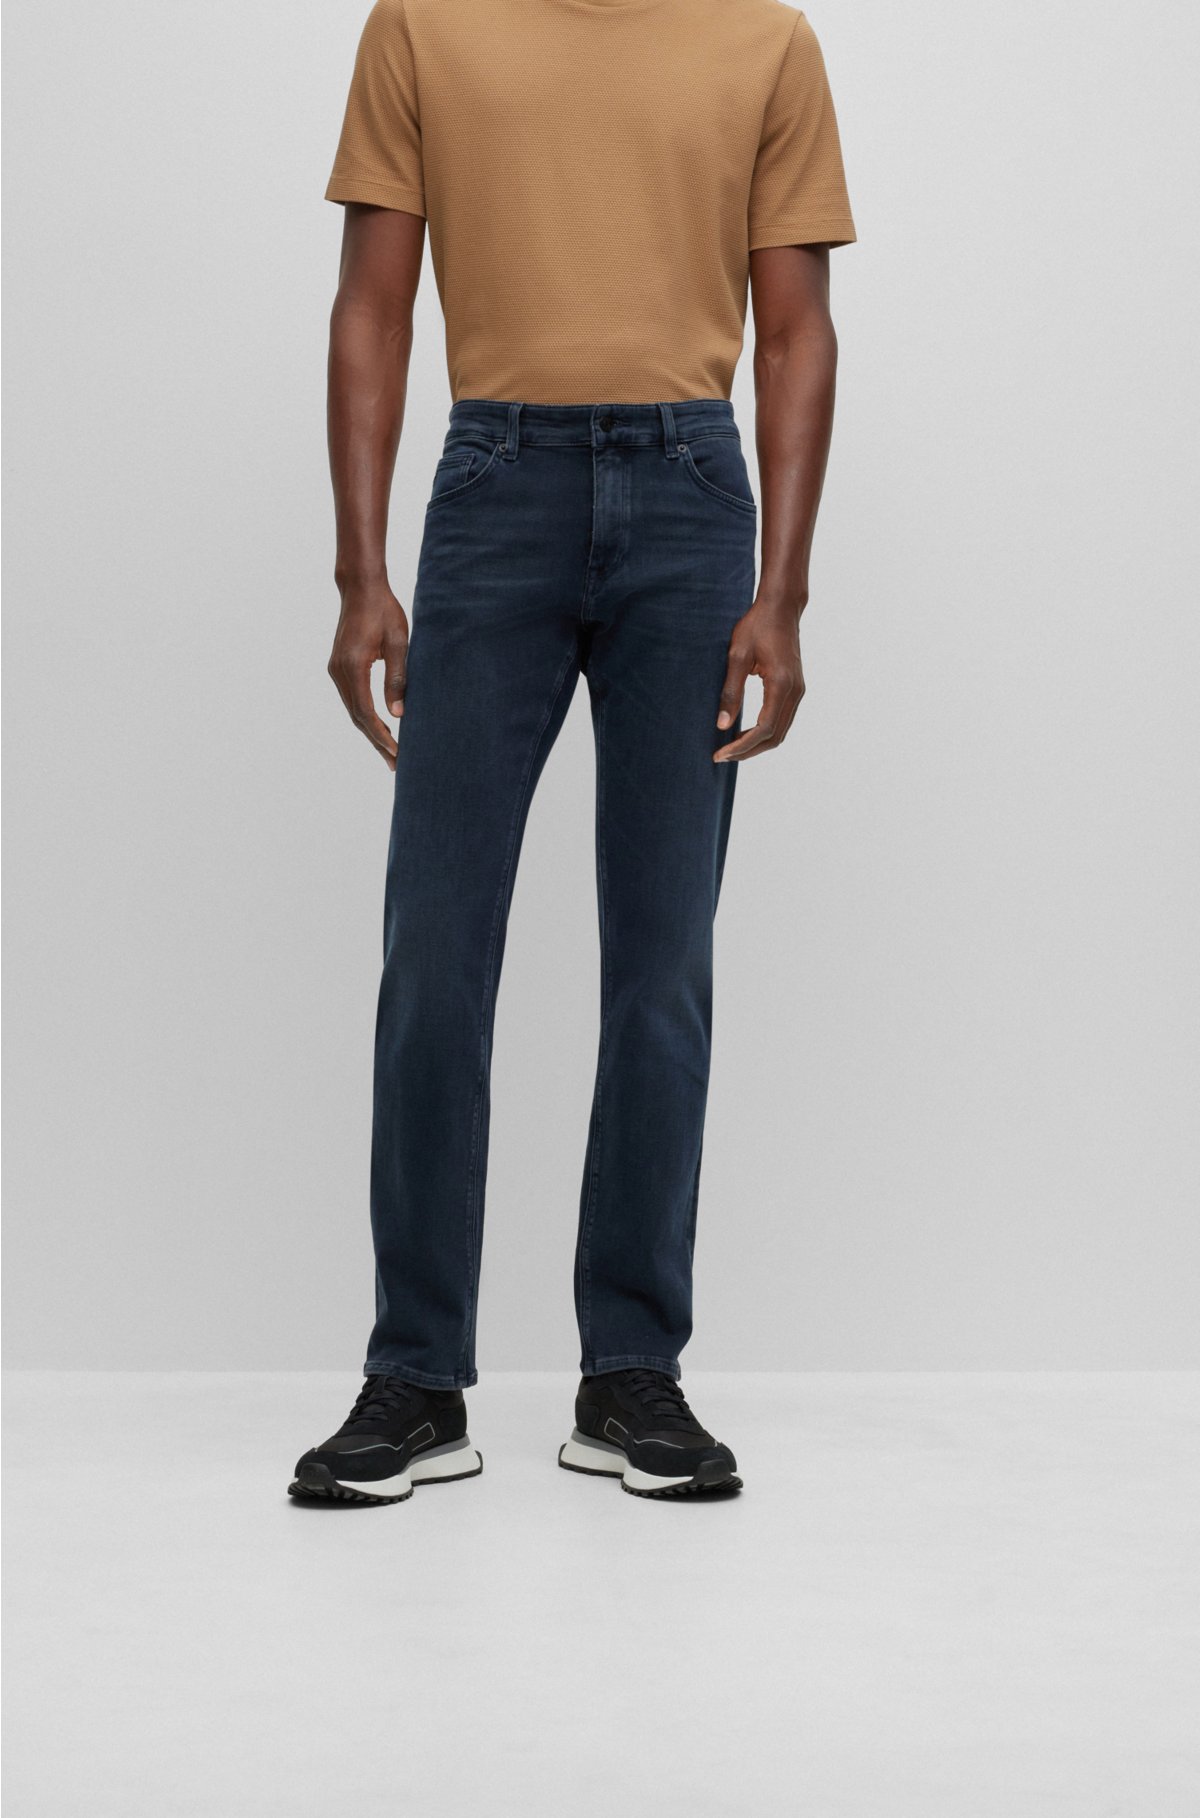 Regular-fit jeans in coal-navy denim